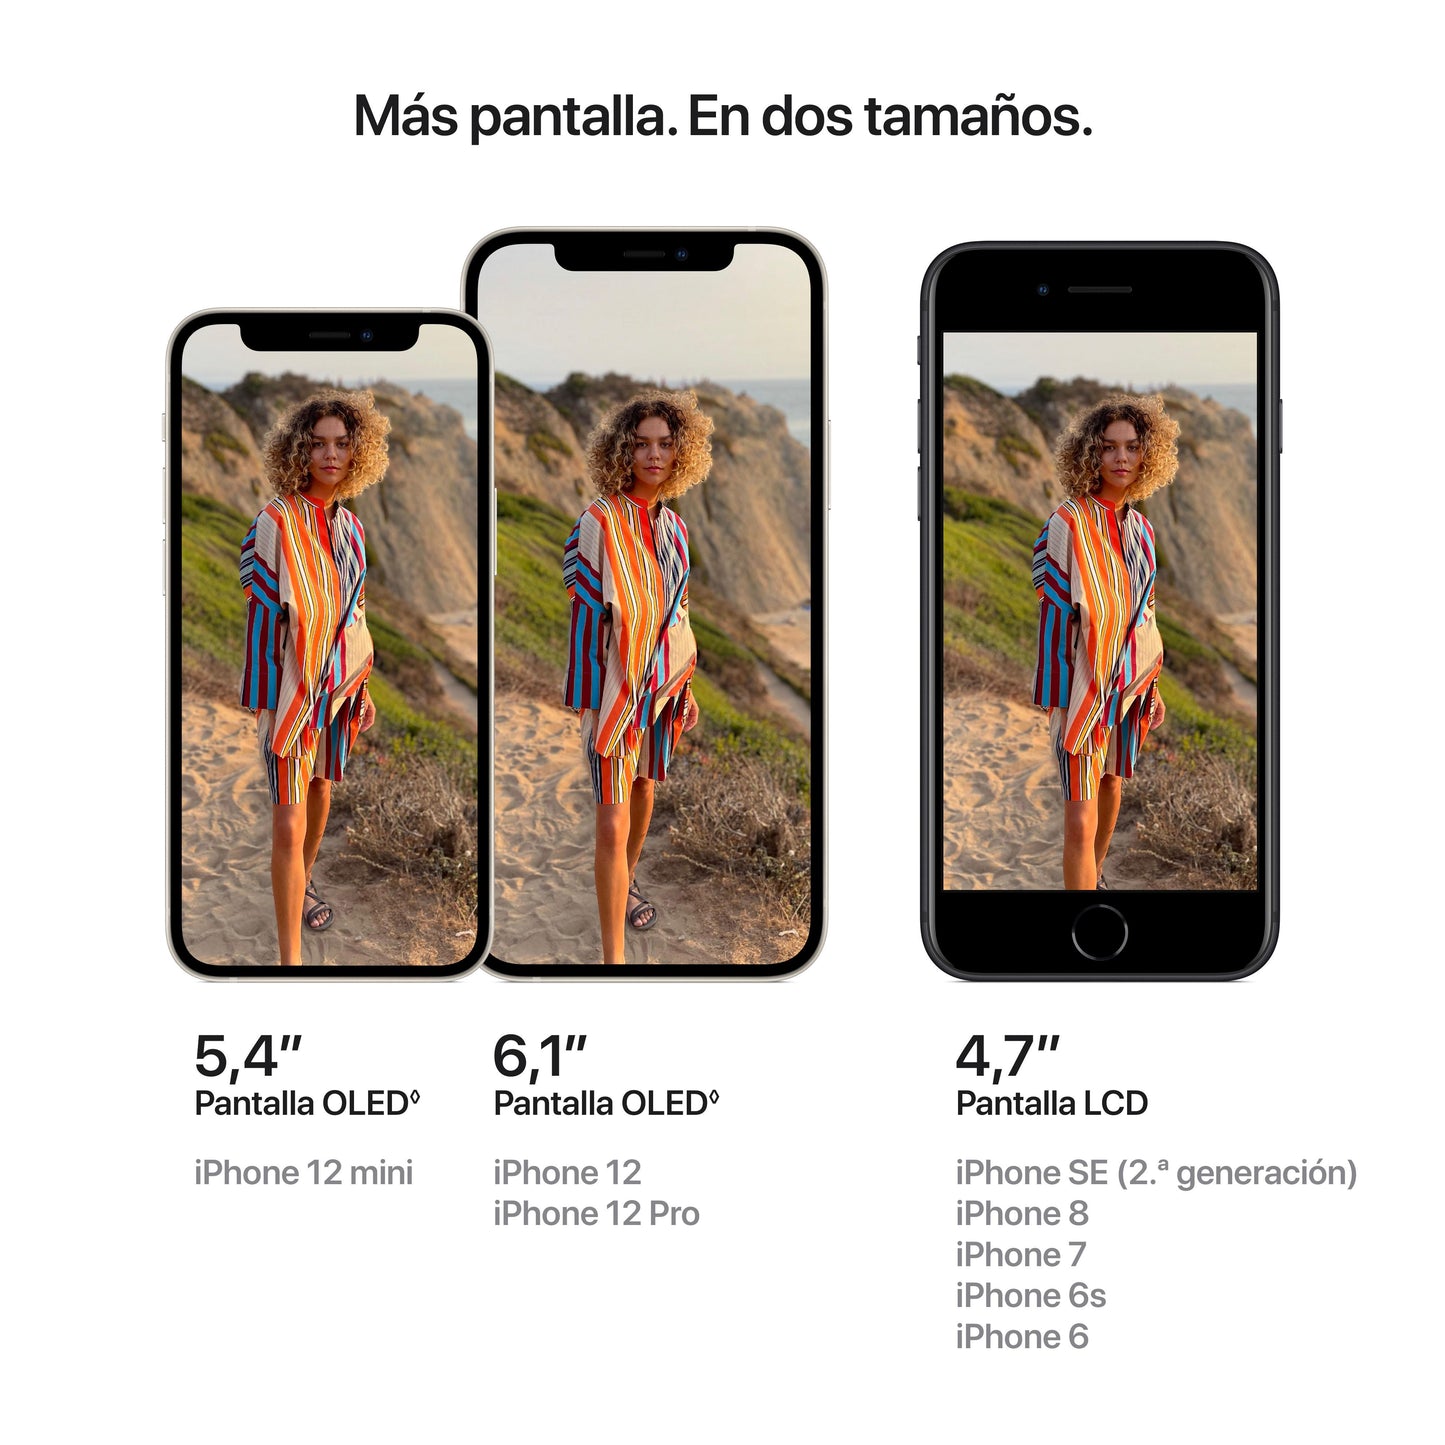 iPhone 12, Azul, 64 GB - Rossellimac